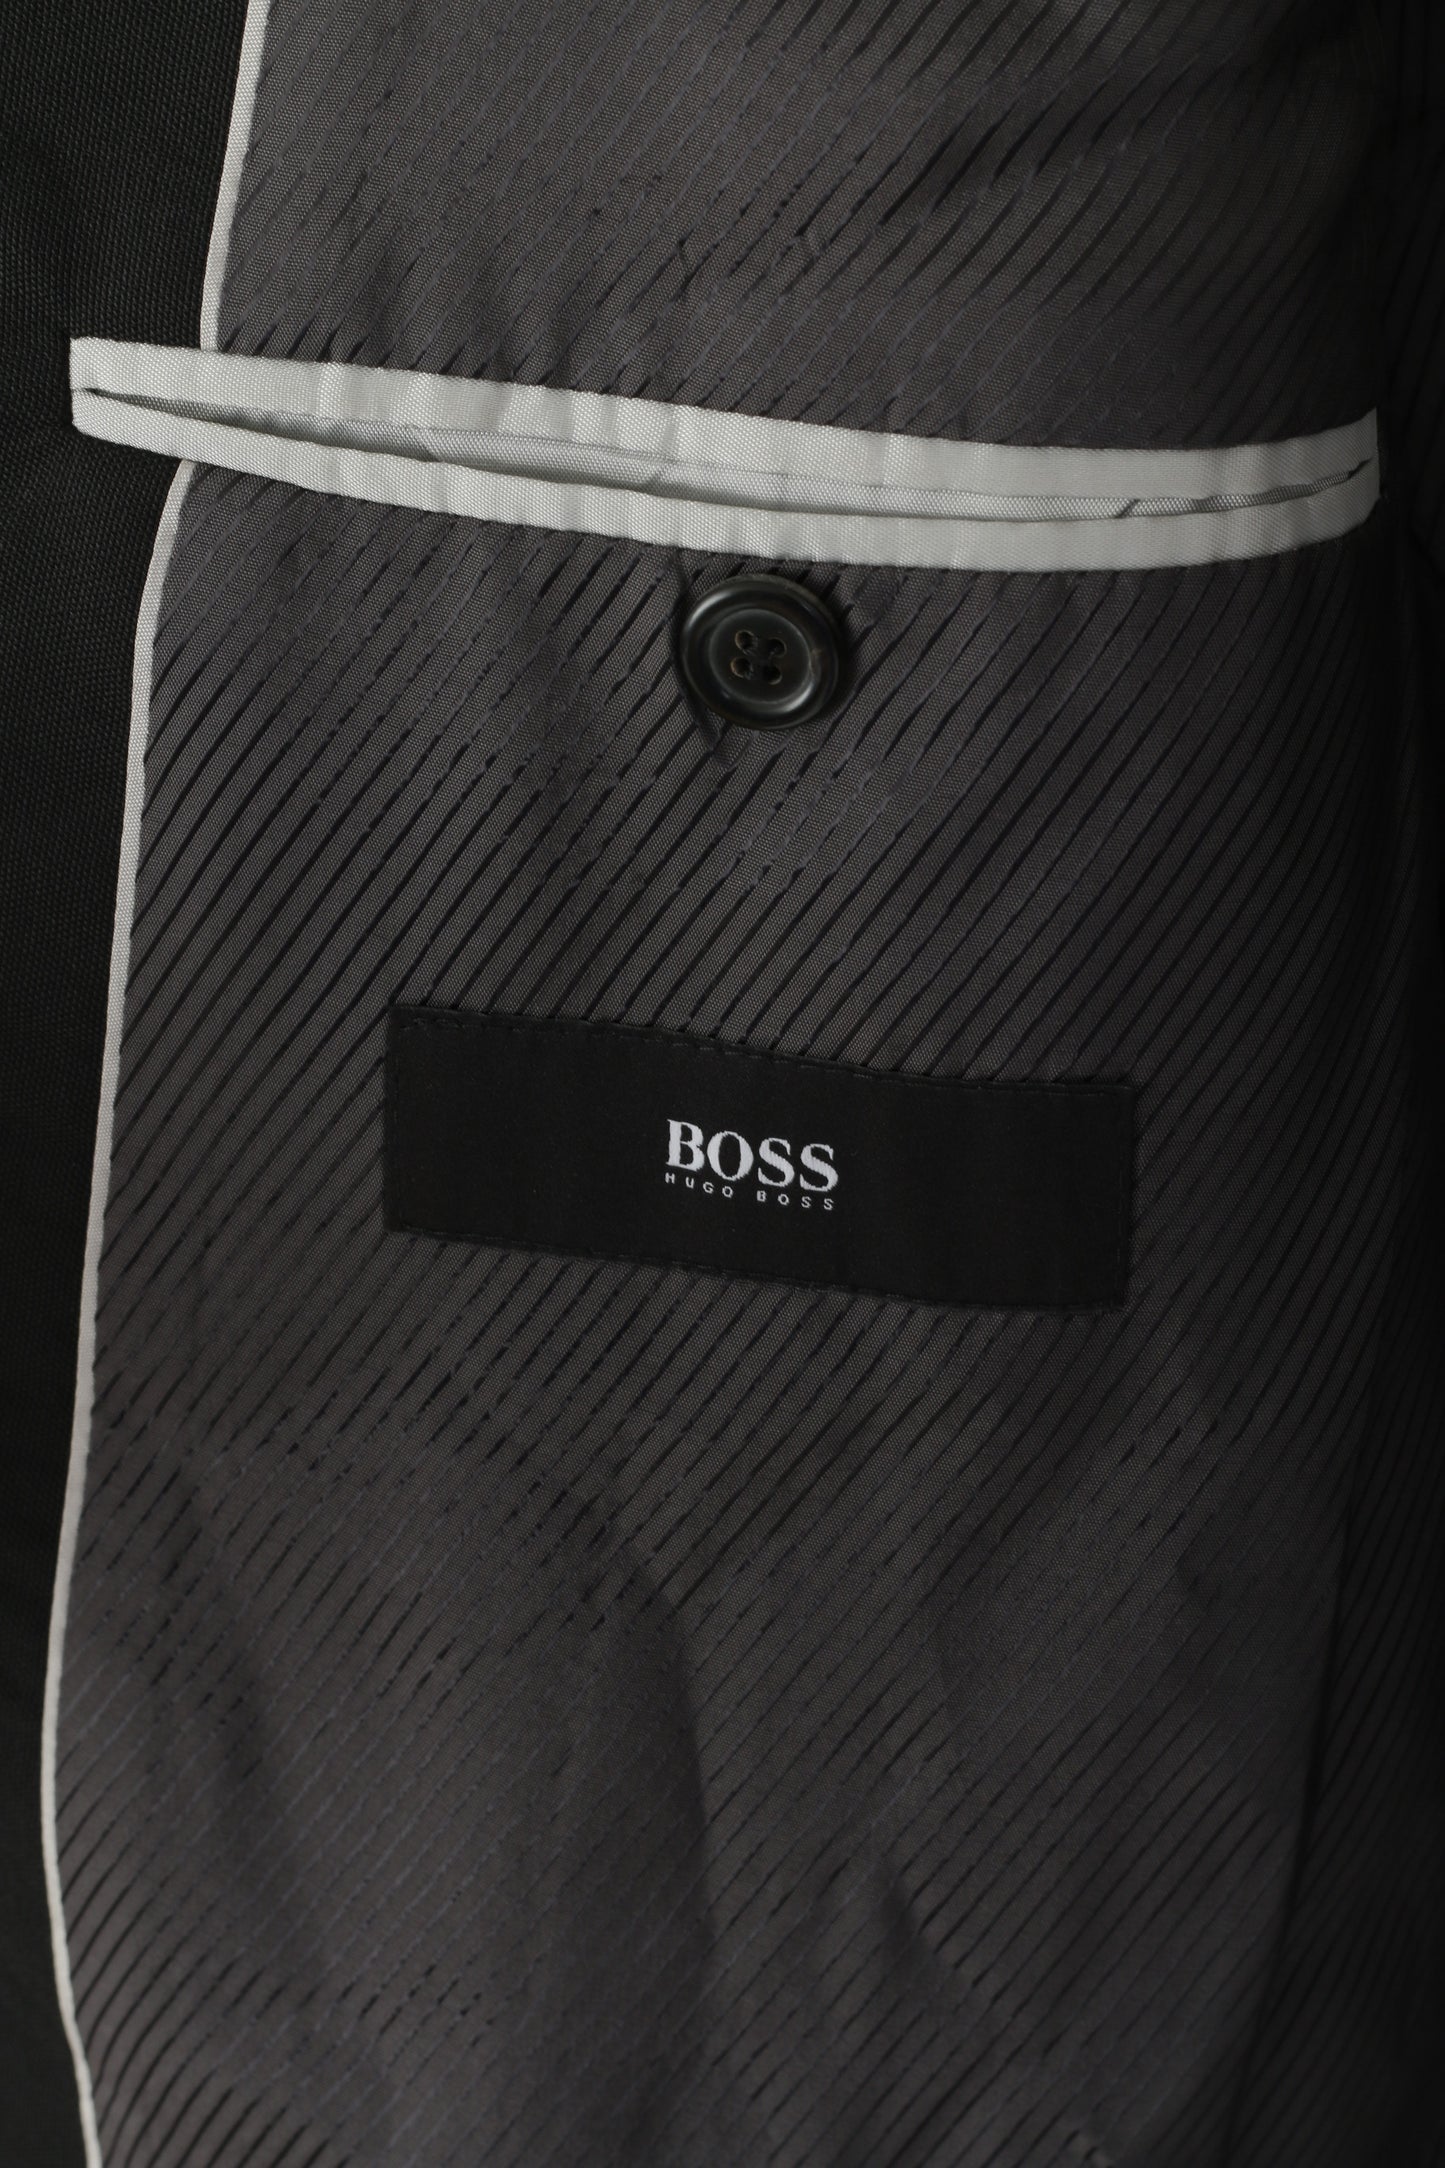 Hugo Boss Men 56 46 Blazer Black Wool The James2 Single Breasted Jacket